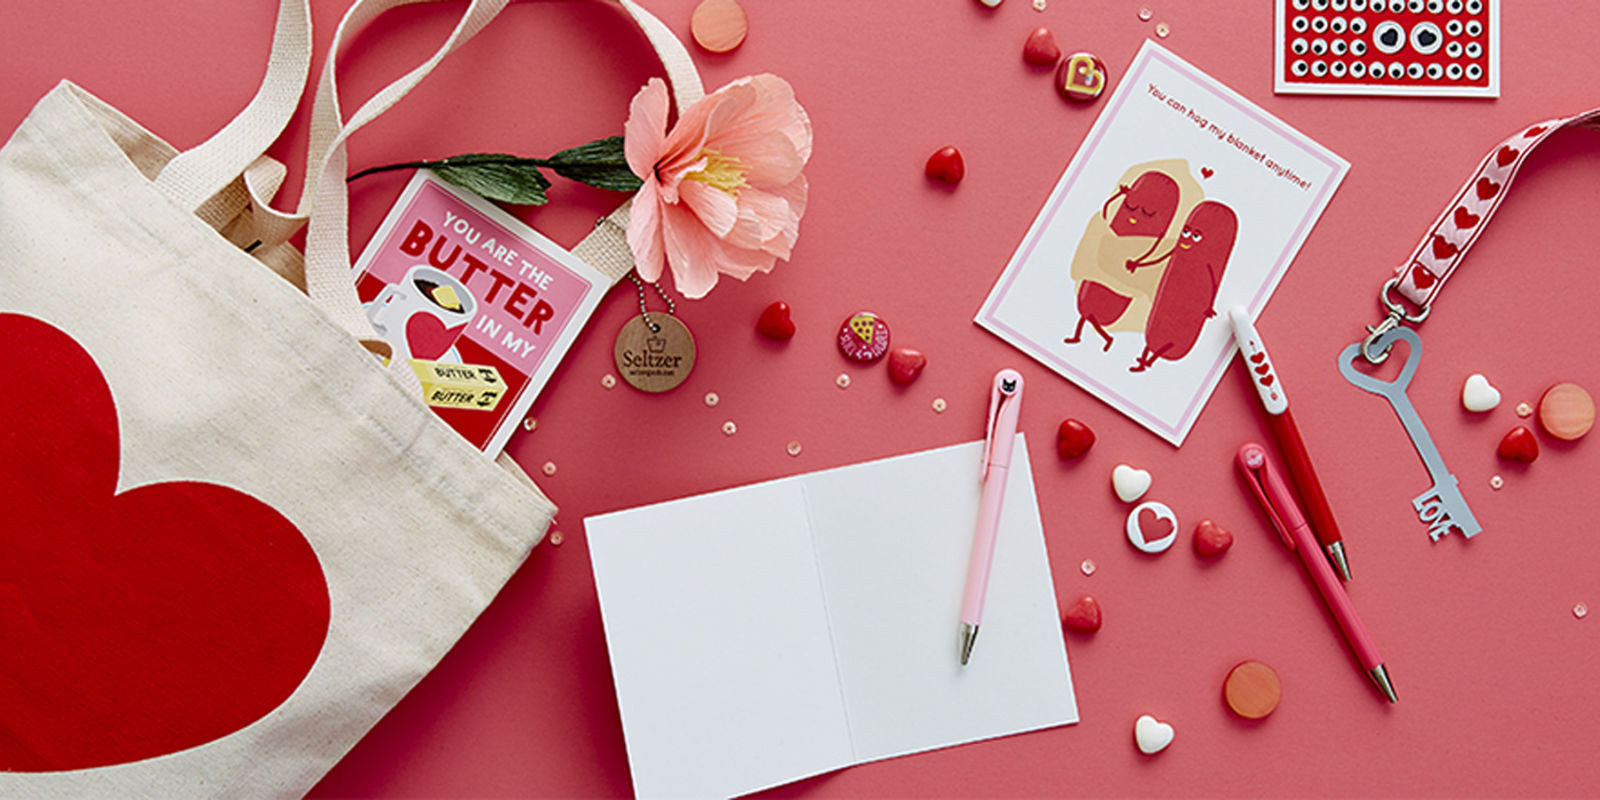 Romantic Valentine Day Gift Ideas
 2017 Valentine s Day Gift Ideas for Him and Her Romantic